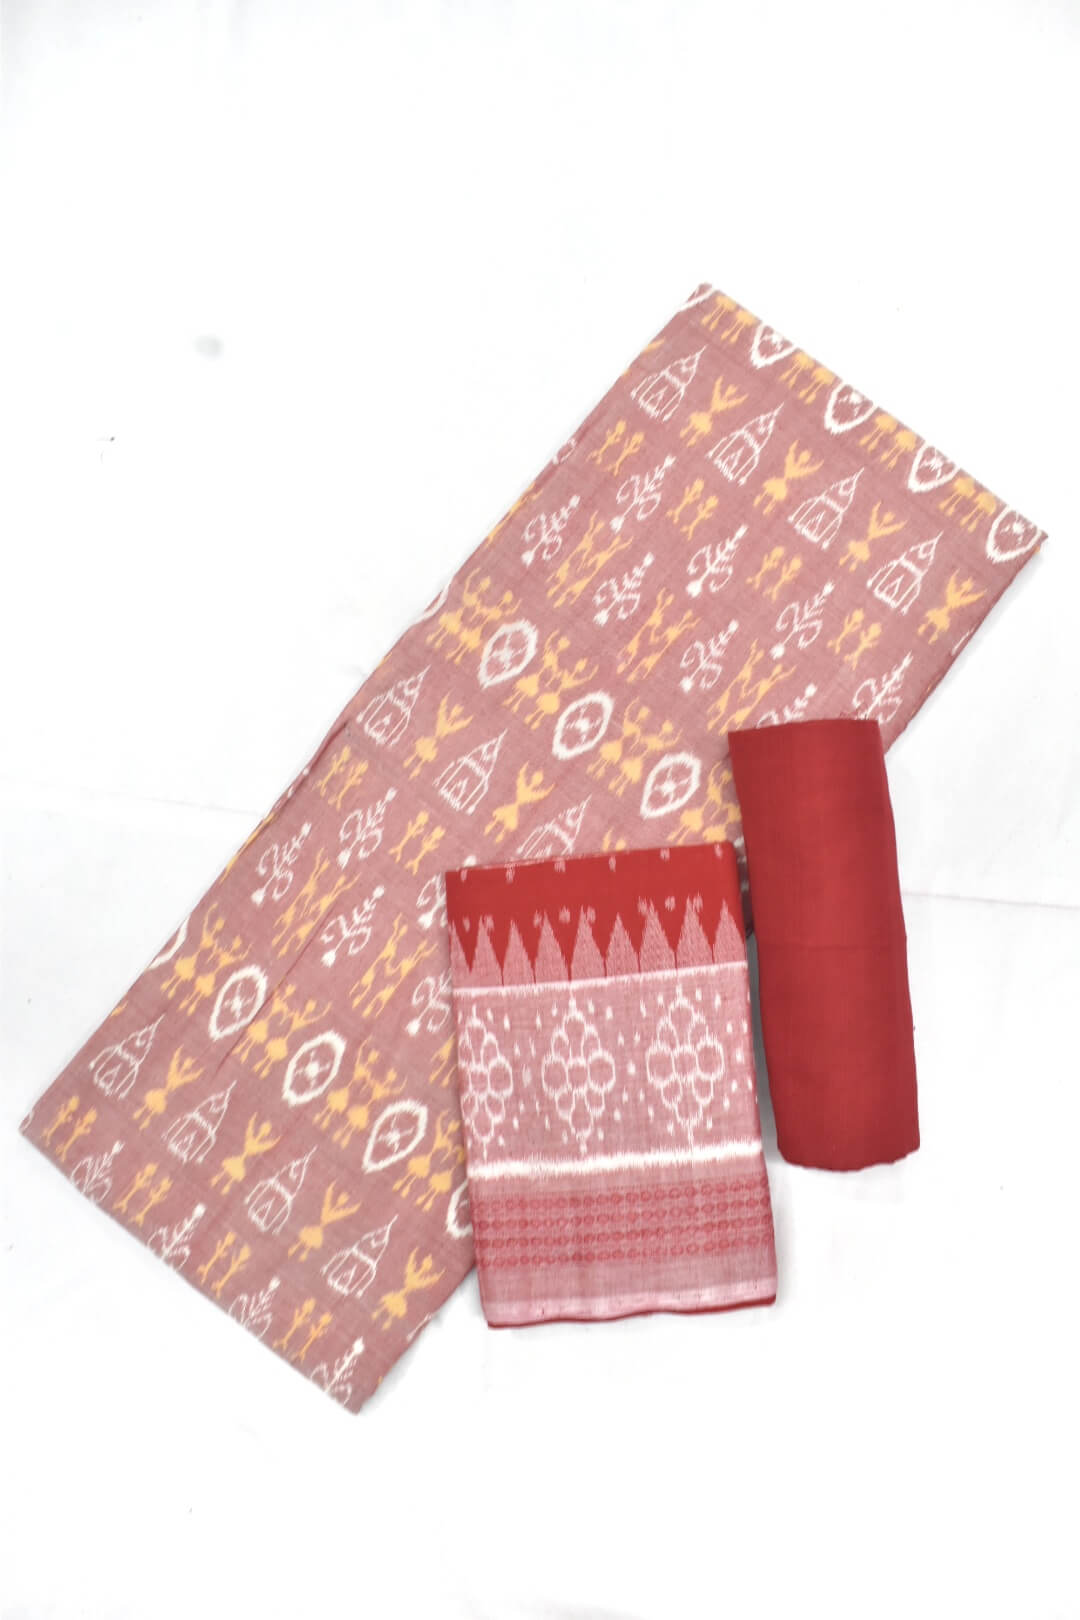 Authentic Handloom Sambalpuri Cotton Dress Material Set | Handloom fashion,  Saree styles, Cotton dress material